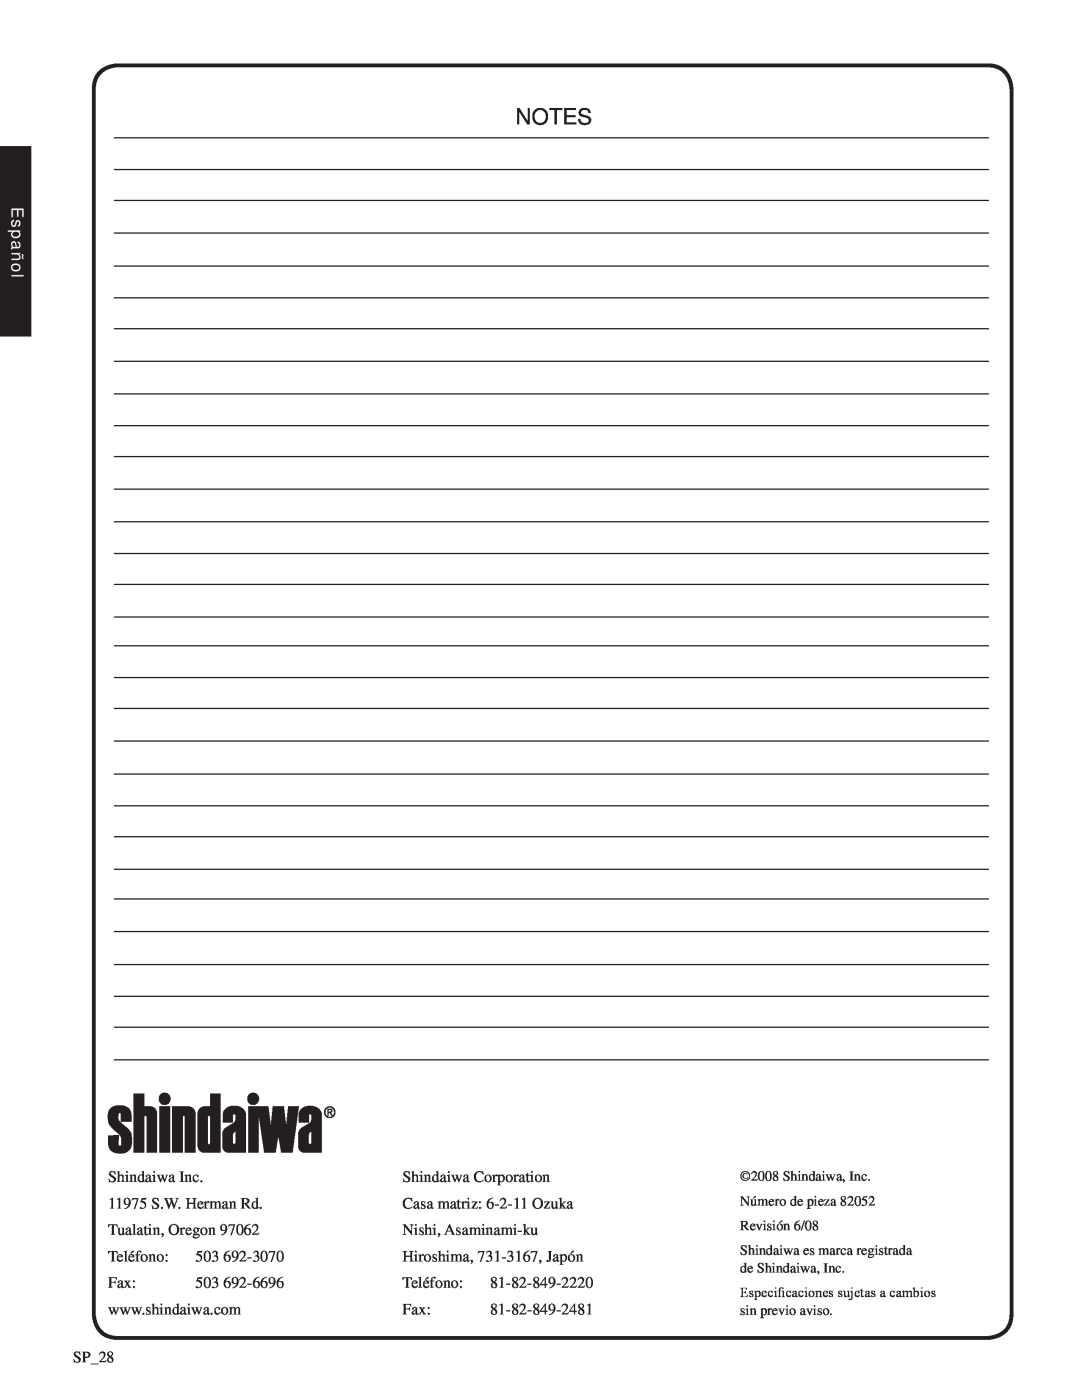 Shindaiwa SV212, 82052 manual notes, Español, Shindaiwa Inc 